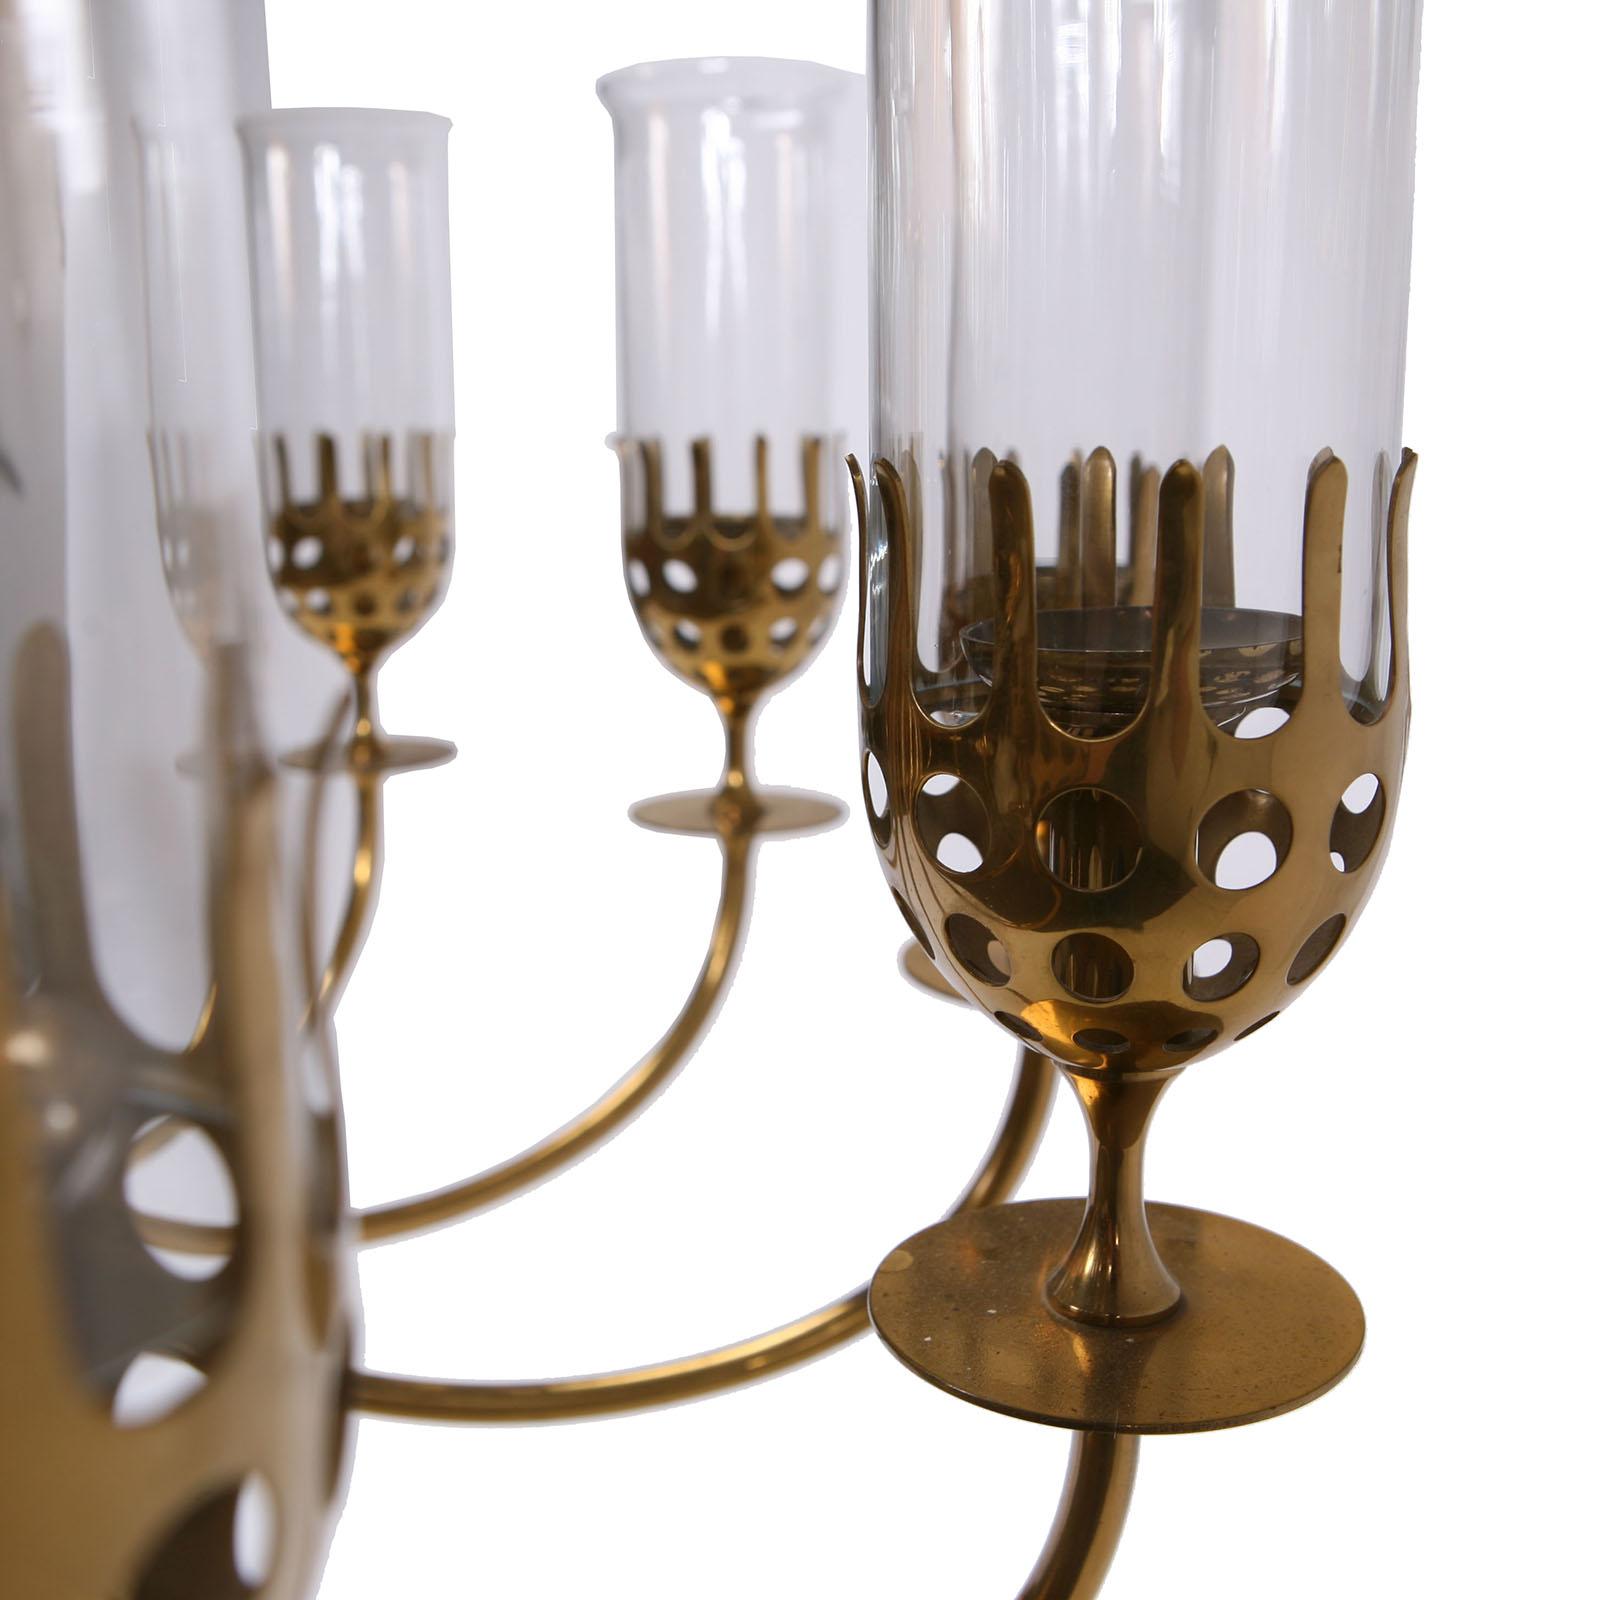 A large brass chandelier with twelve arms for candles.
Designed by Danish artist Bjørn Wiinblad, circa 1970.